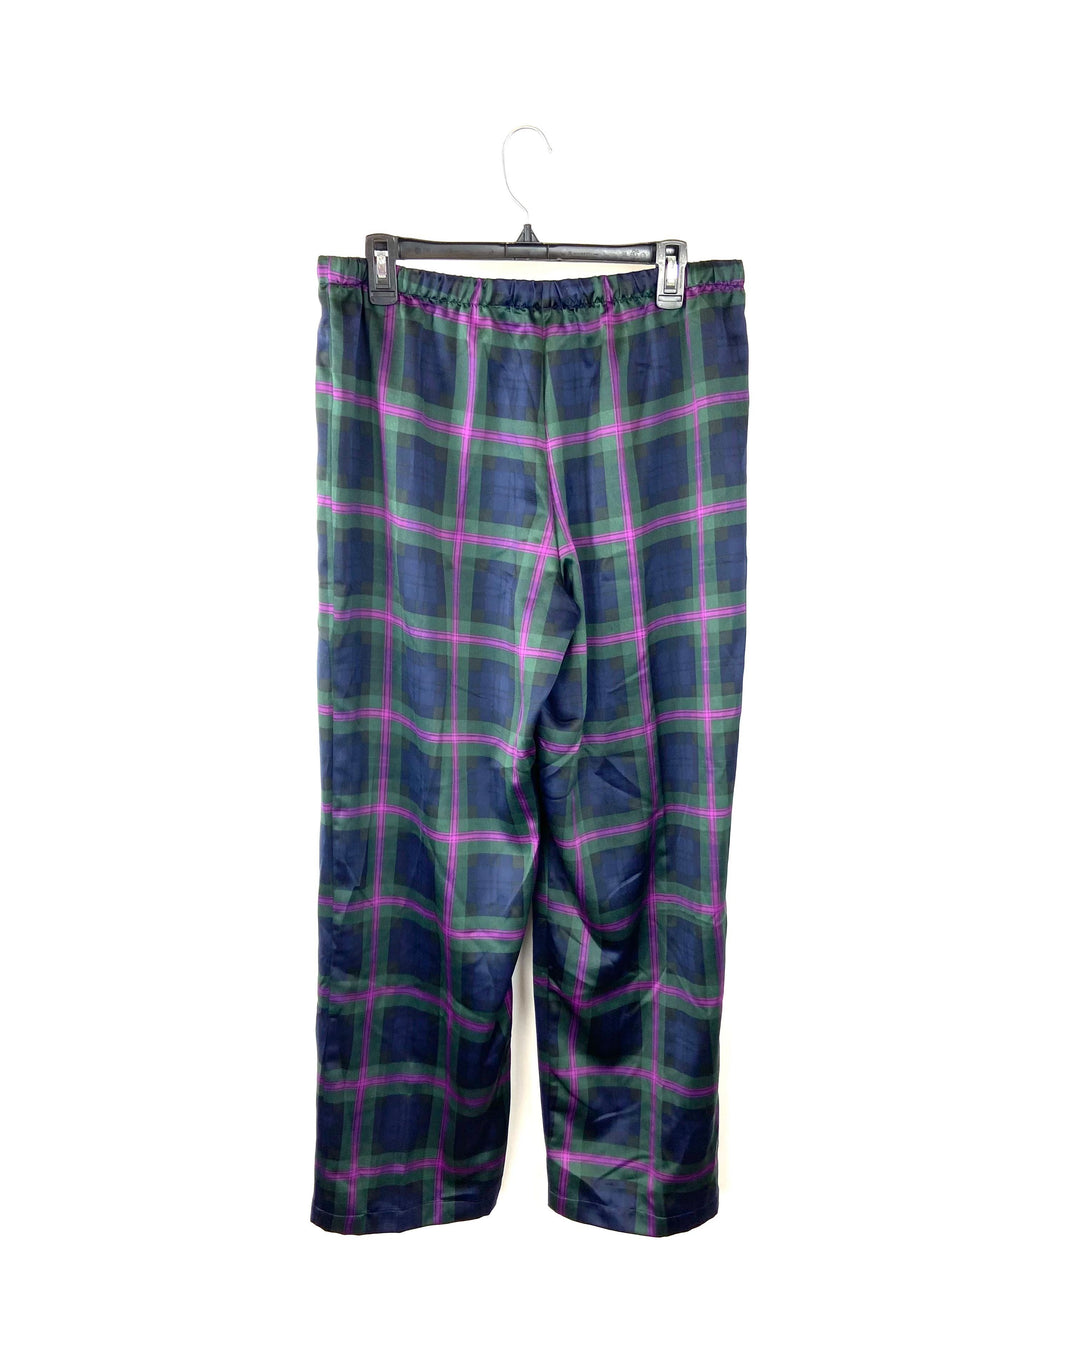 Dark Green Plaid Pajama Pants - Large